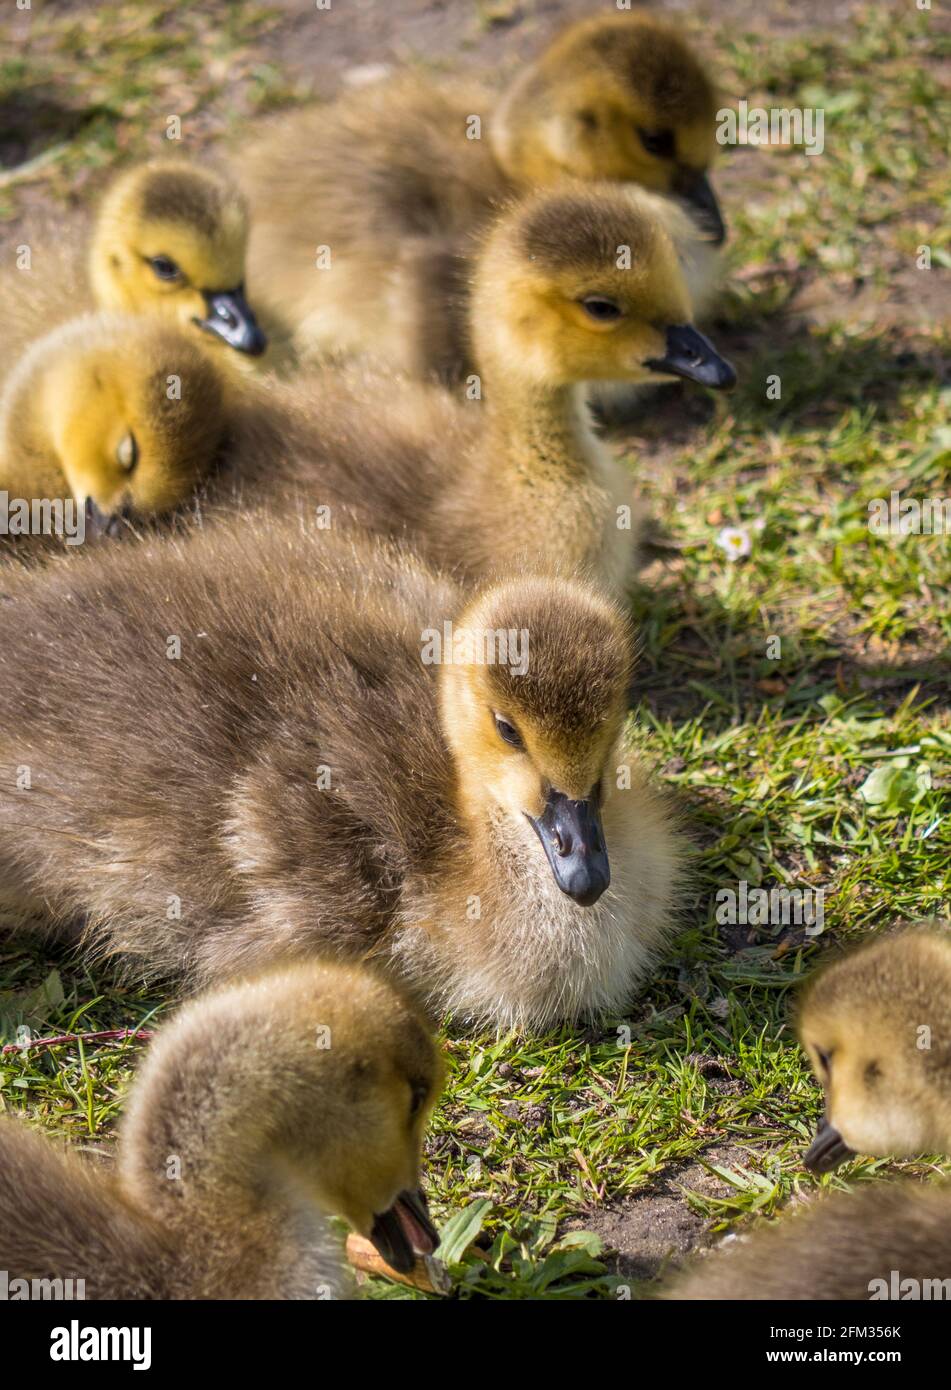 Goslings, Canada Geese, Caversham, Christchurch Meadows, Reading, Berkshire, Inglaterra, Reino Unido, GB. Foto de stock